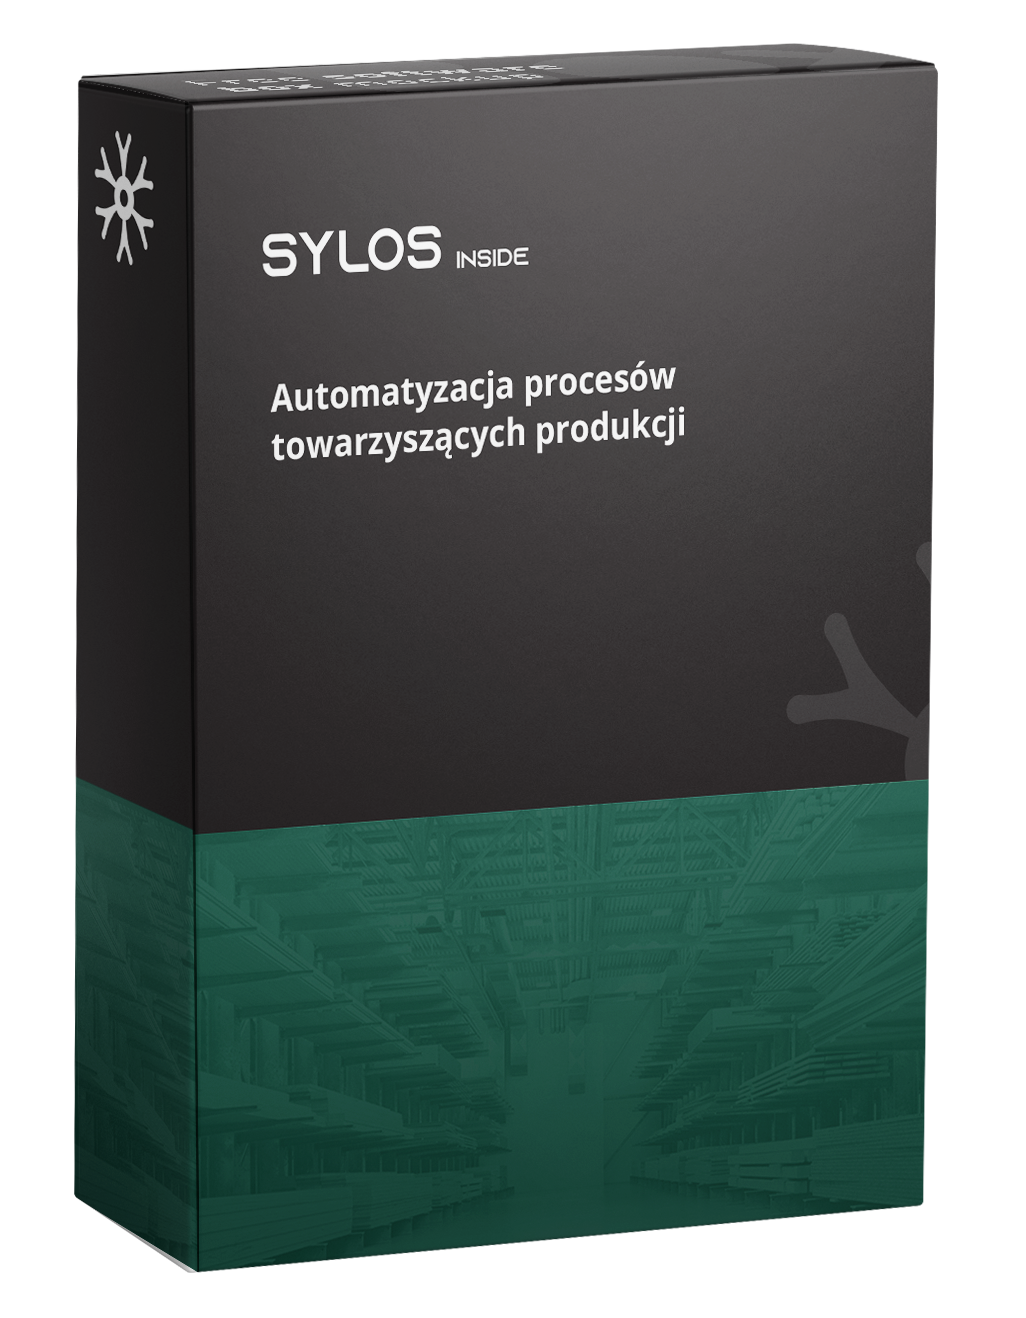 sylos inside